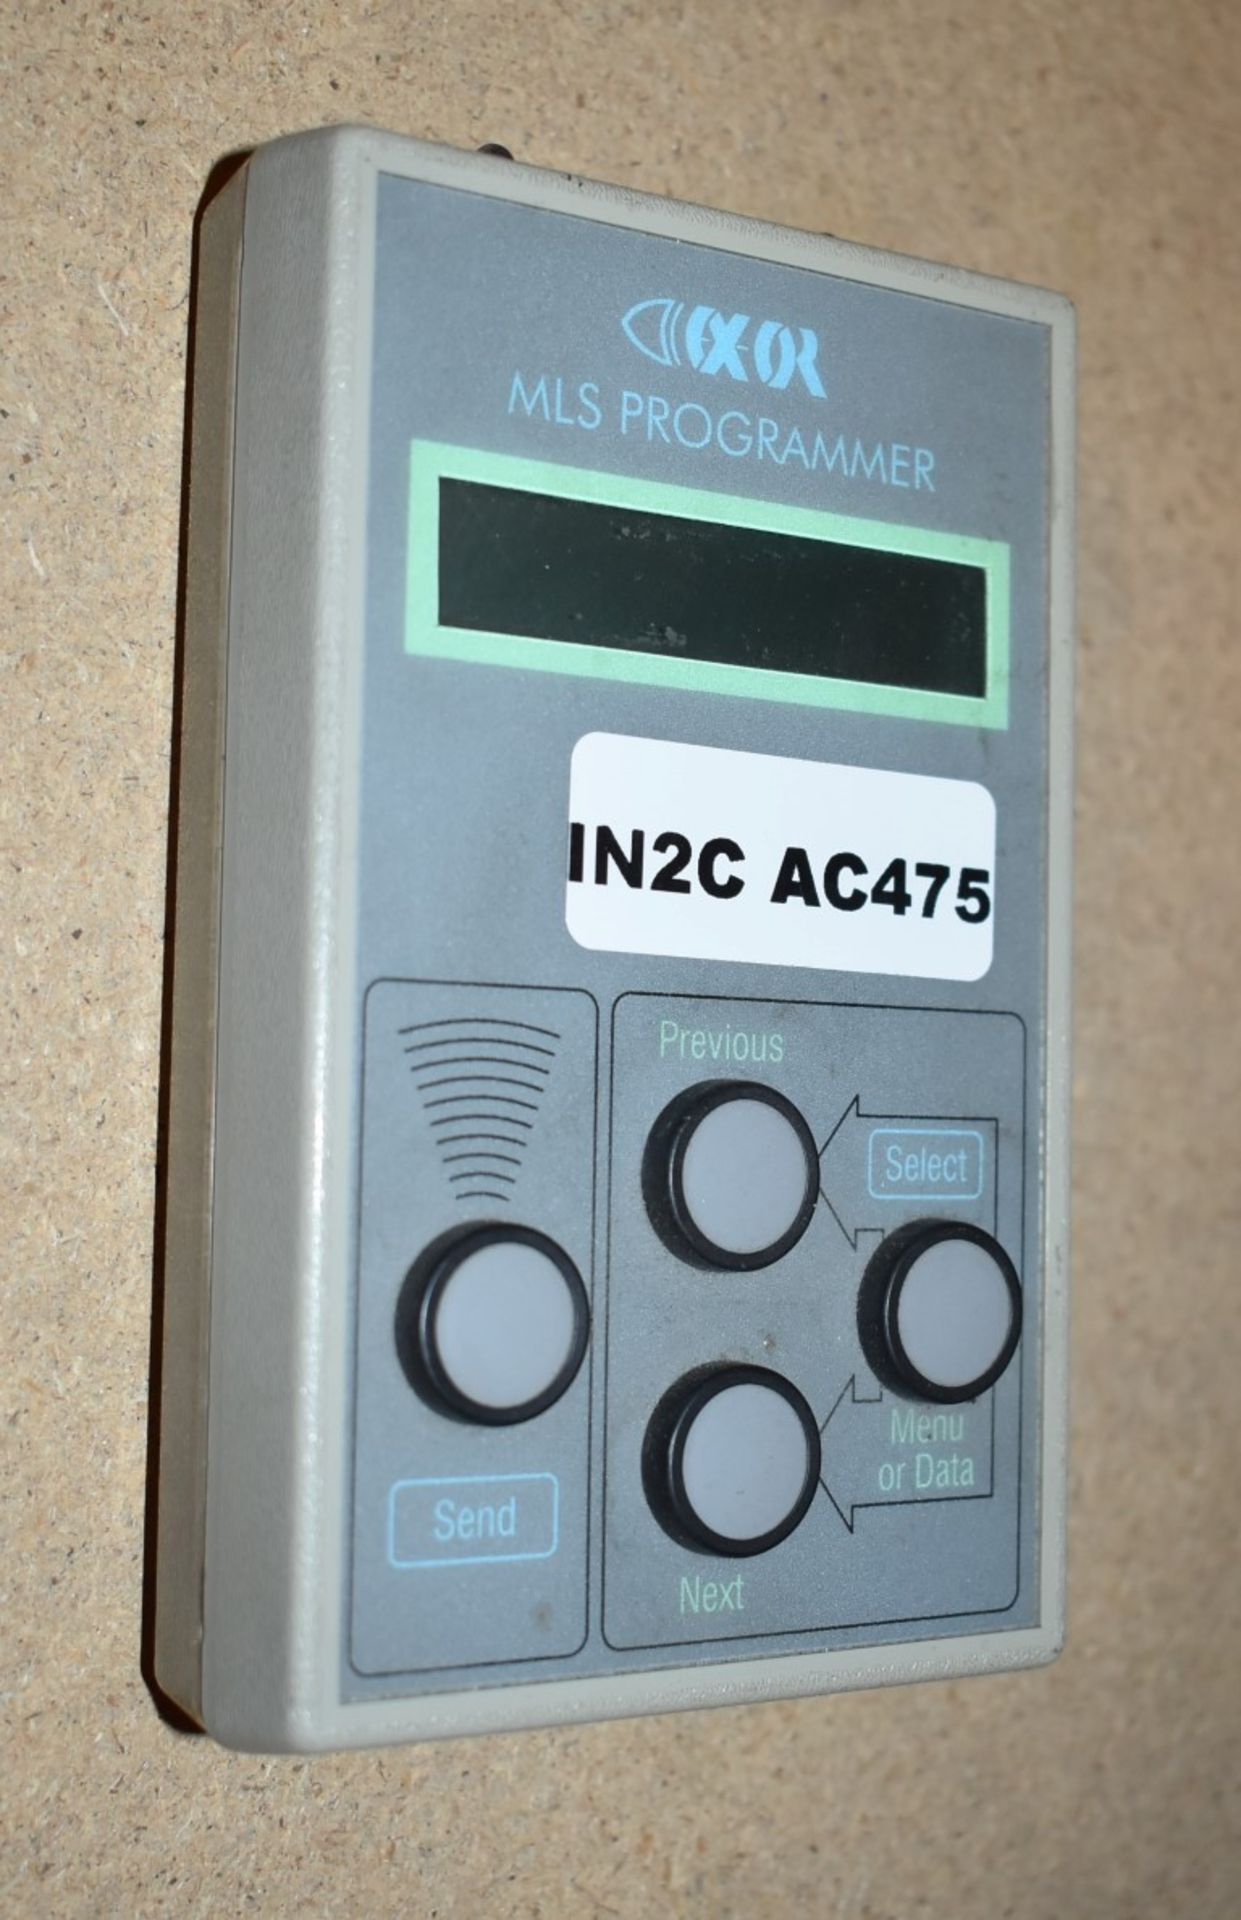 1 x MLS Handheld Programmer - Ref: AC475 GFBR - CL646 - Location: Manchester, M12 Collection